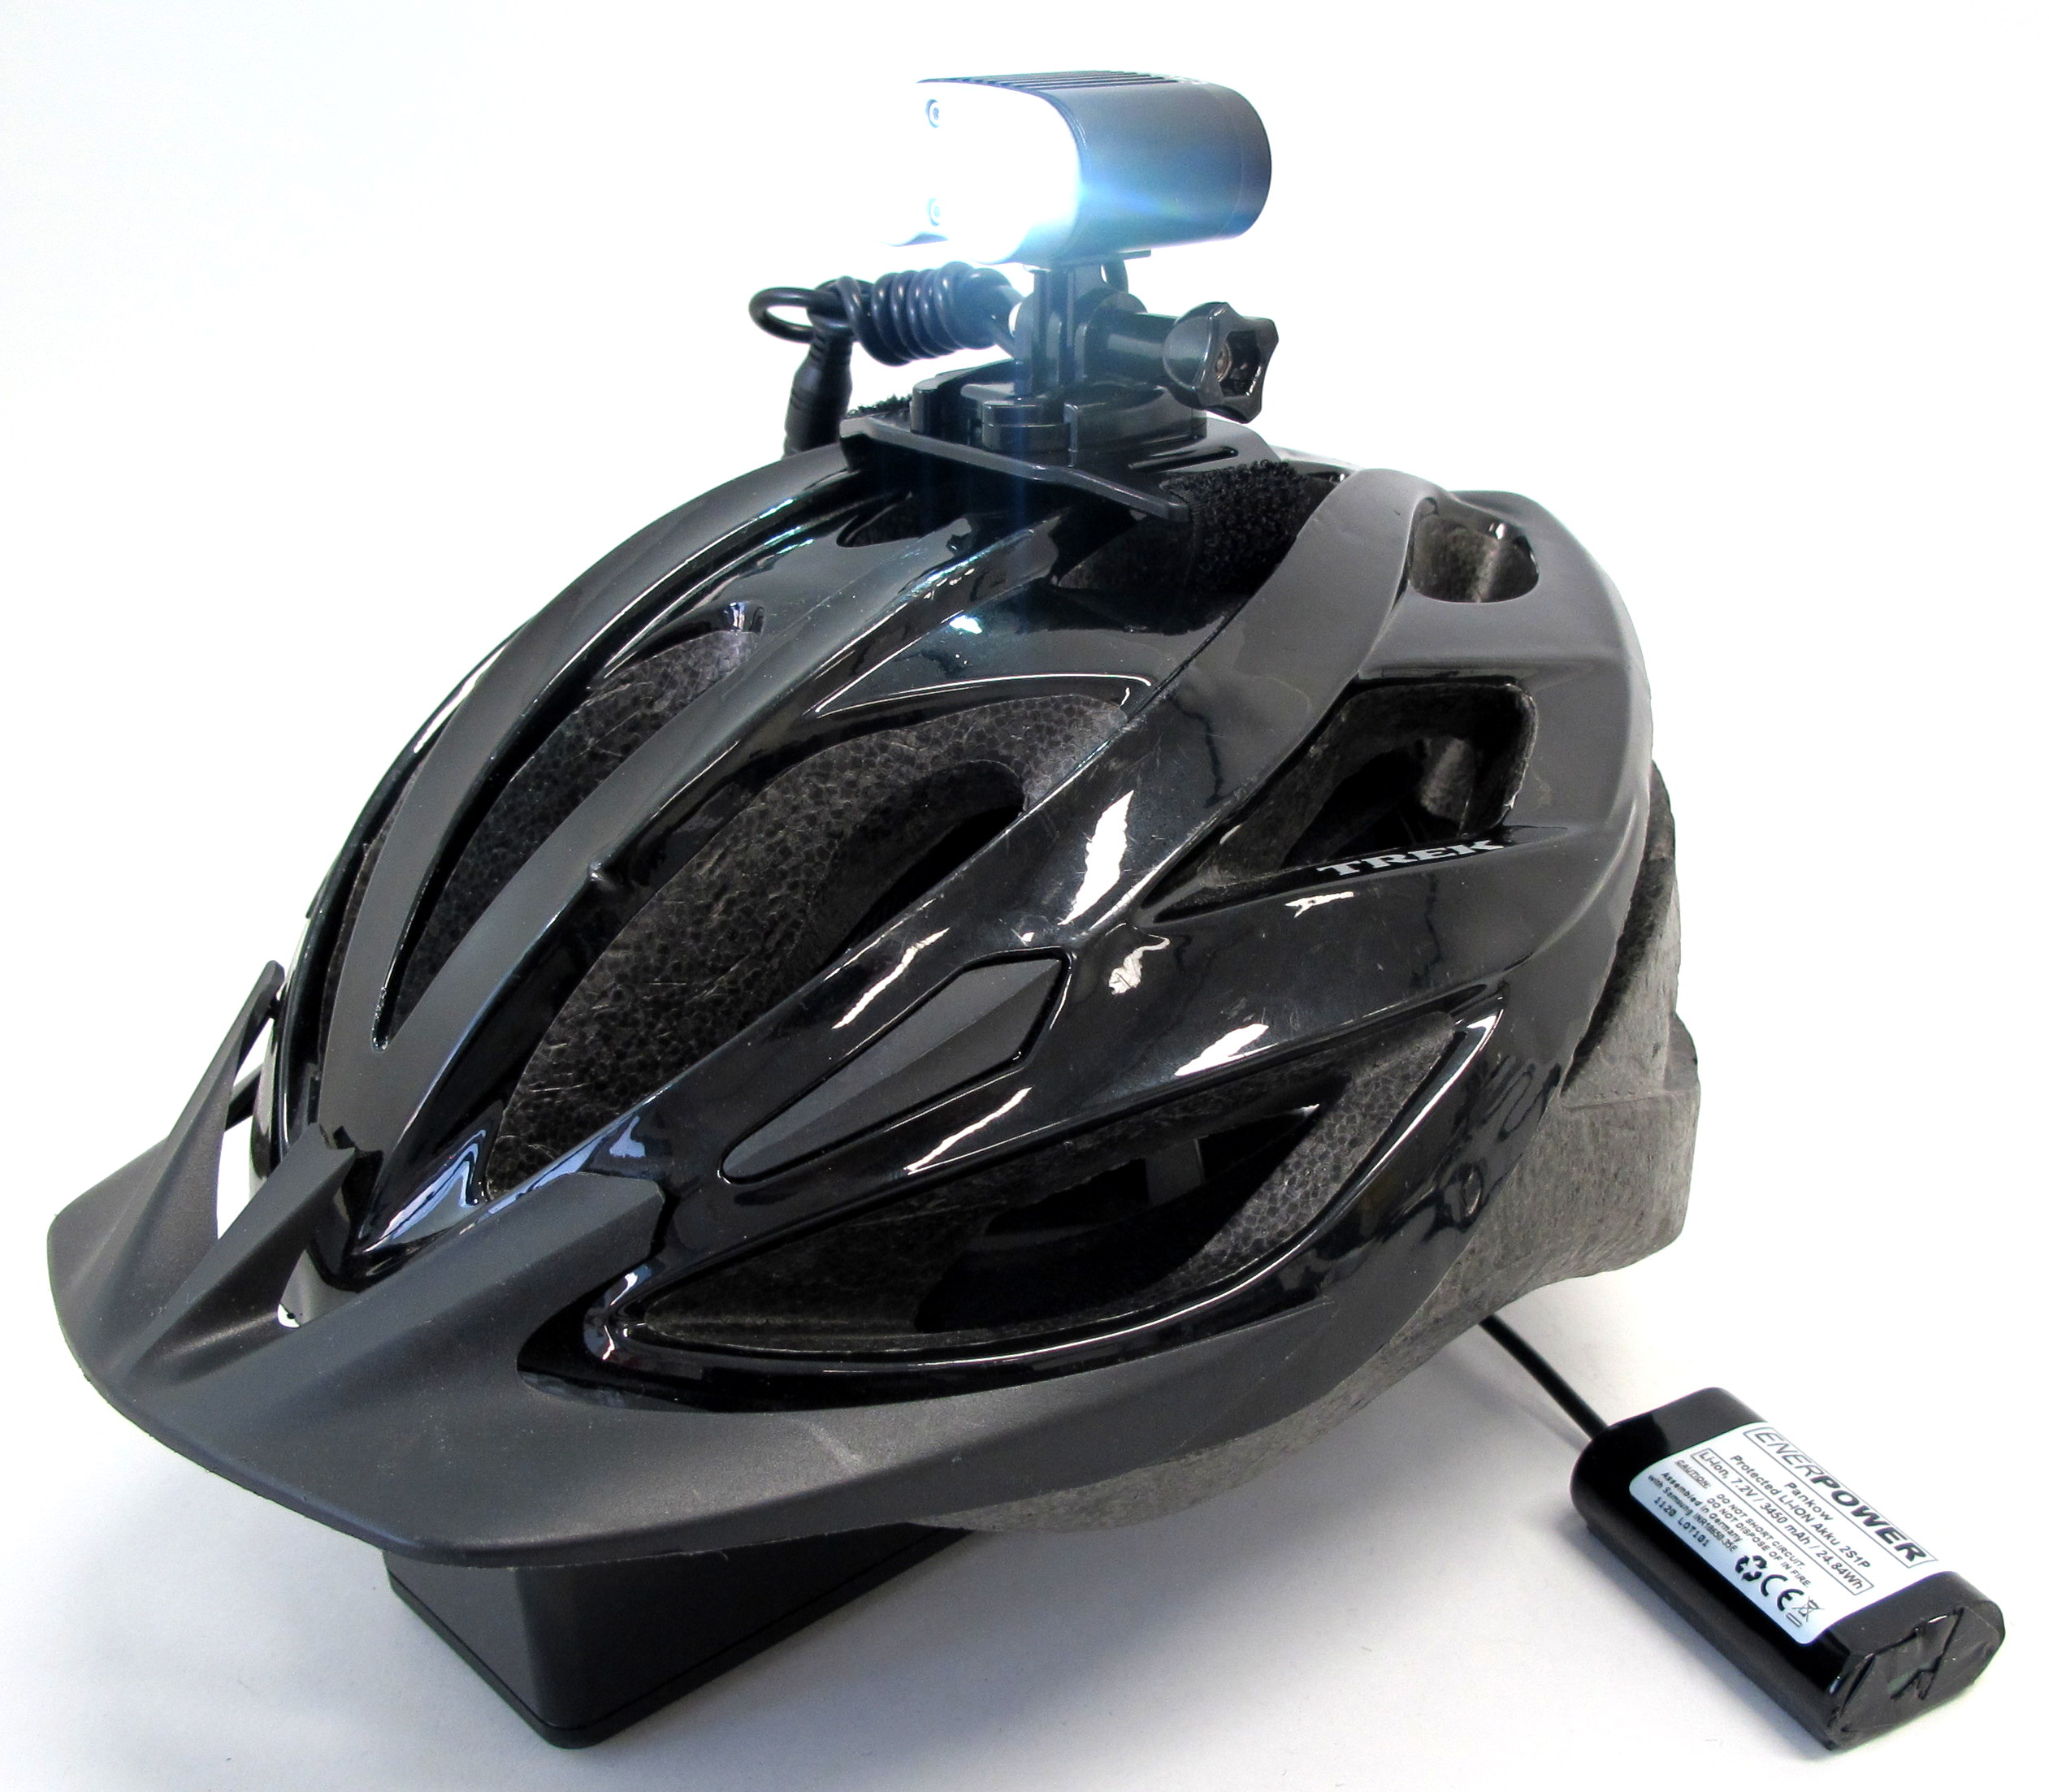 Enerpower EAGLE  Two CREE XM-L2 U2 helmet lamp 2200 lumens GoPro Version